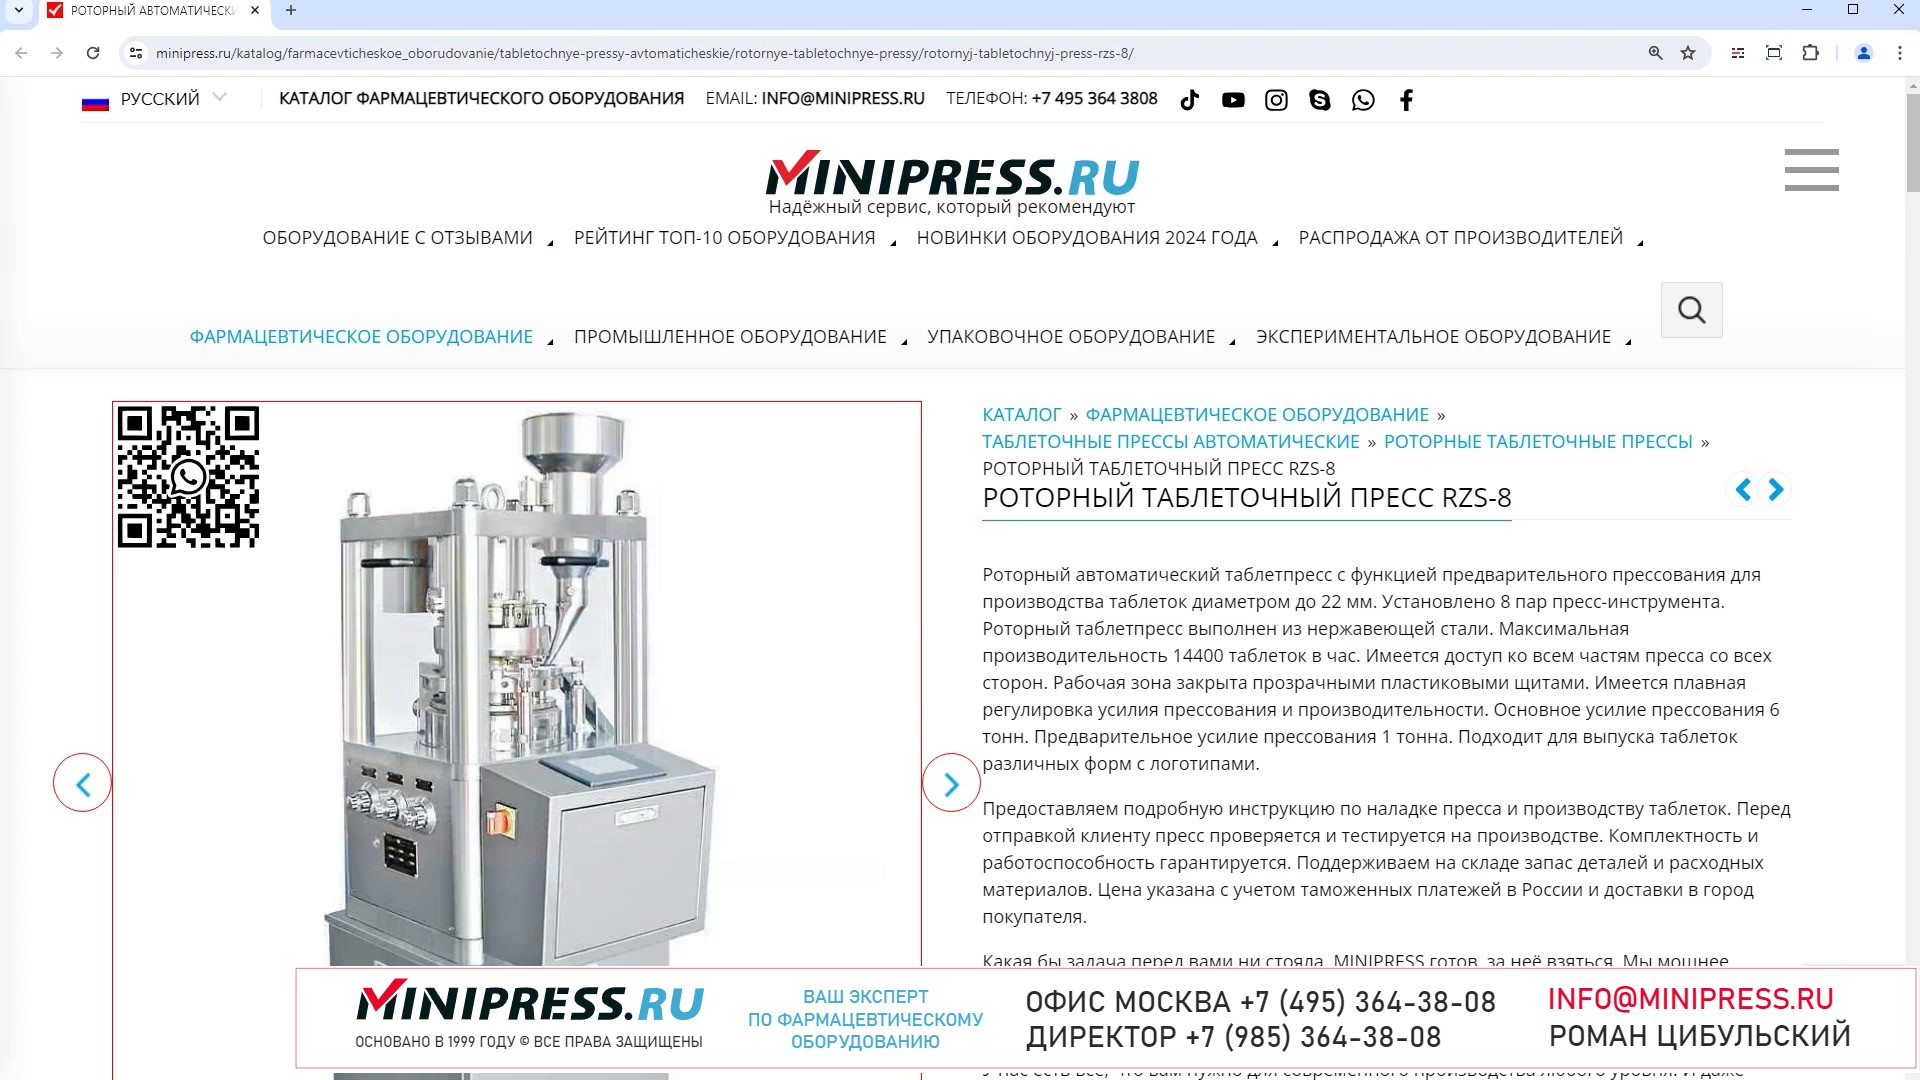 Minipress.ru Роторный таблеточный пресс RZS-8